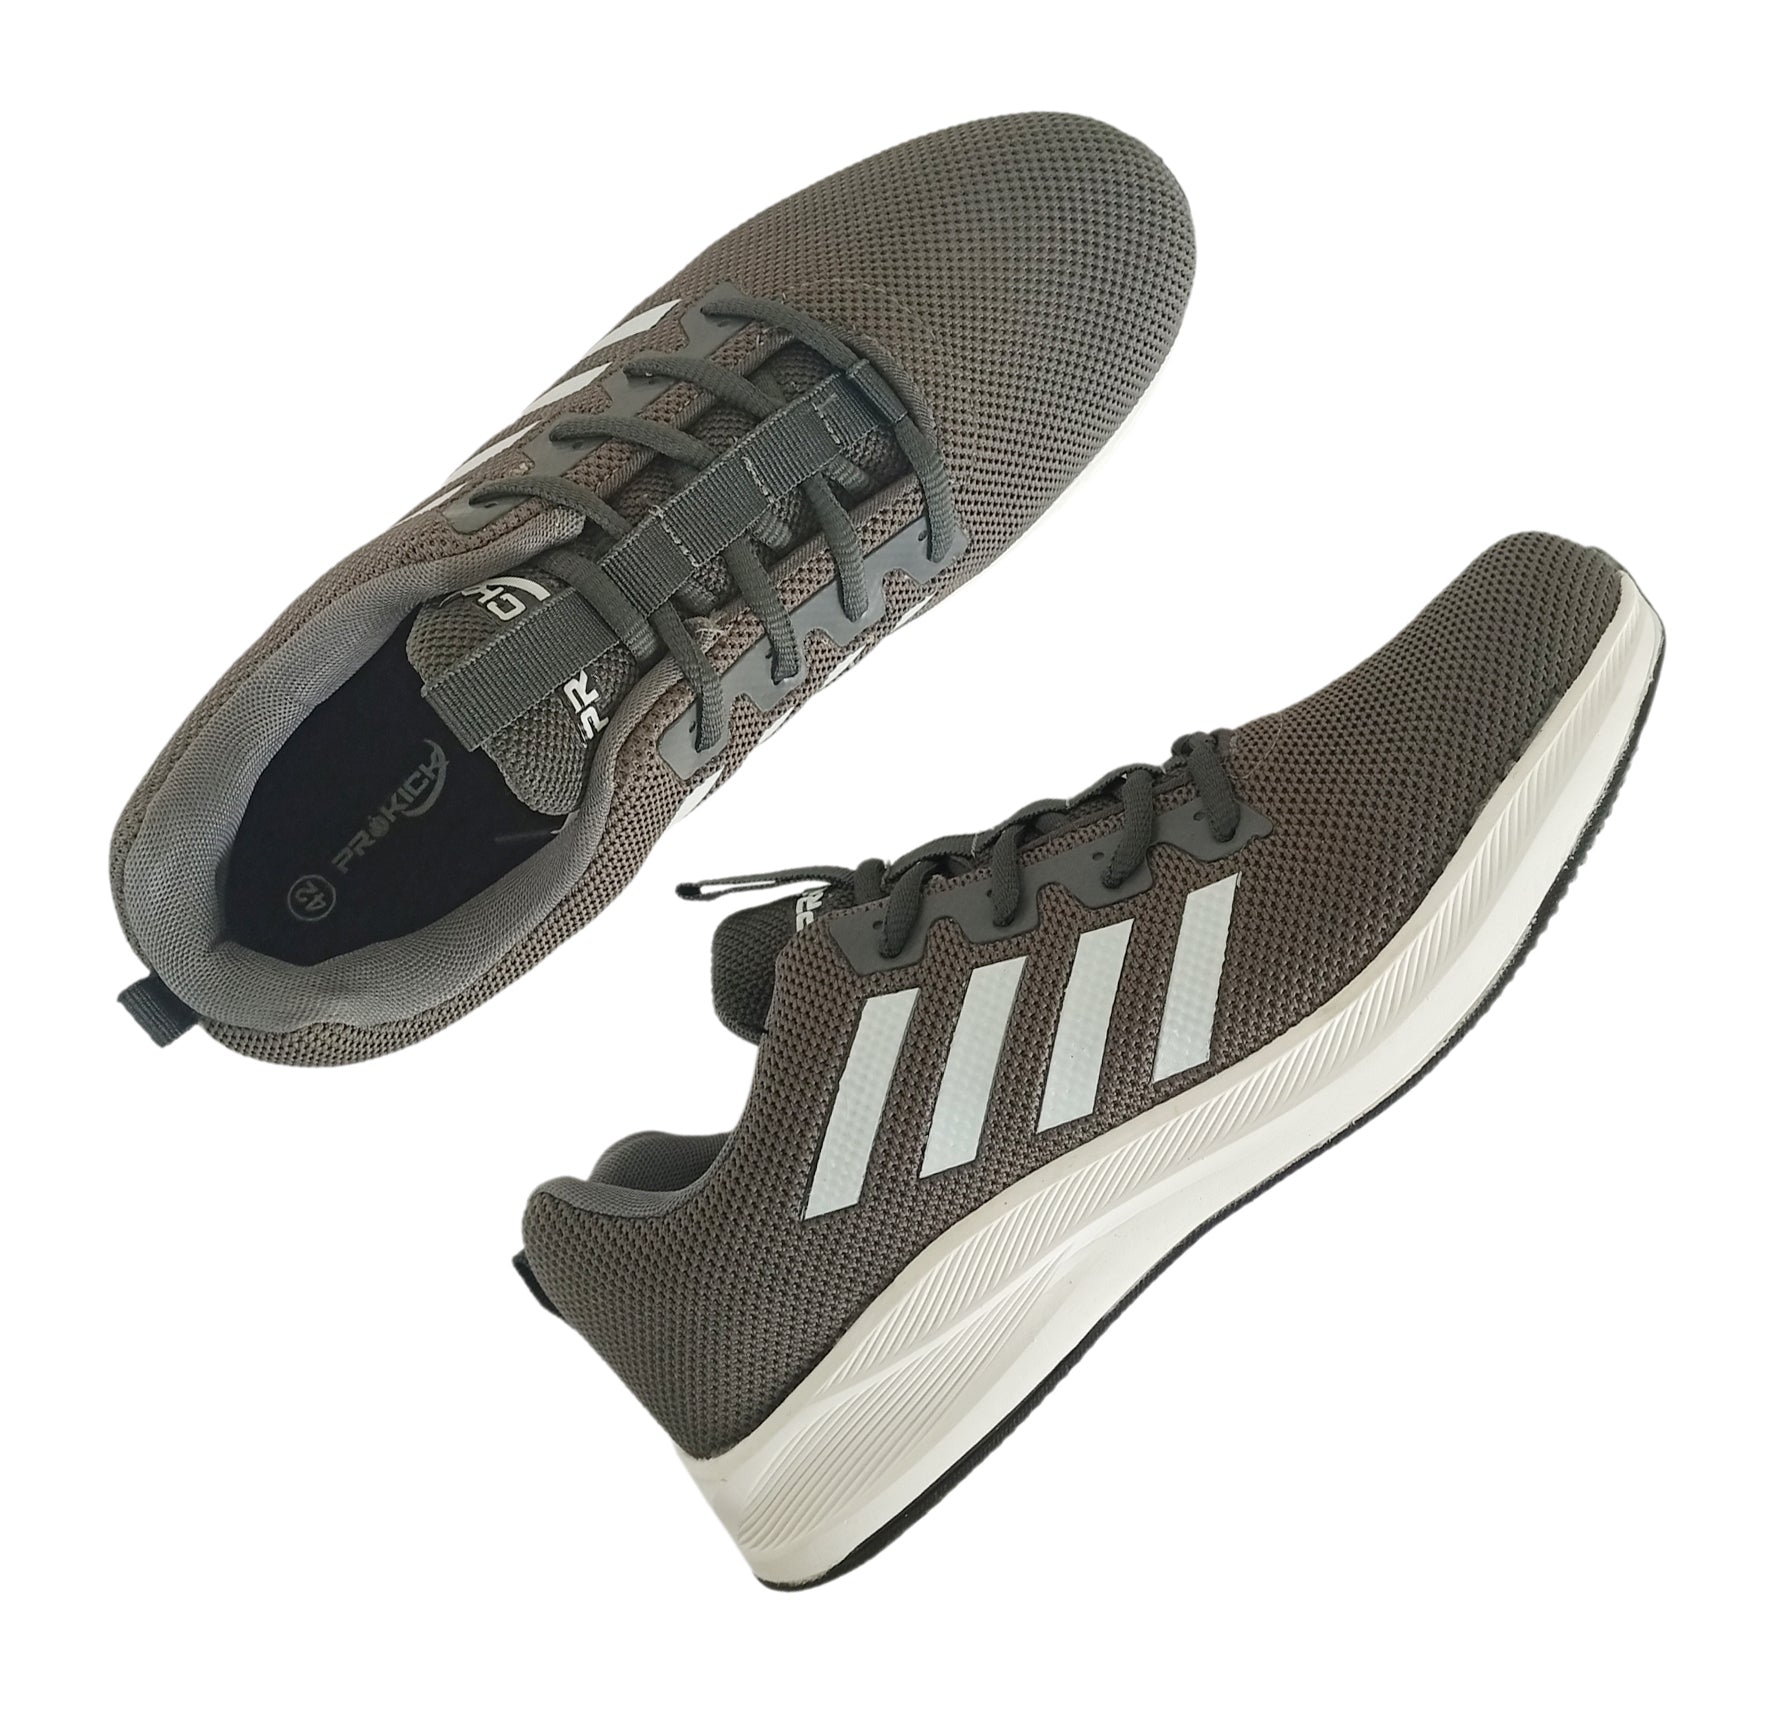 Prokick Jogger Running/Walking Shoes, Grey - Best Price online Prokicksports.com